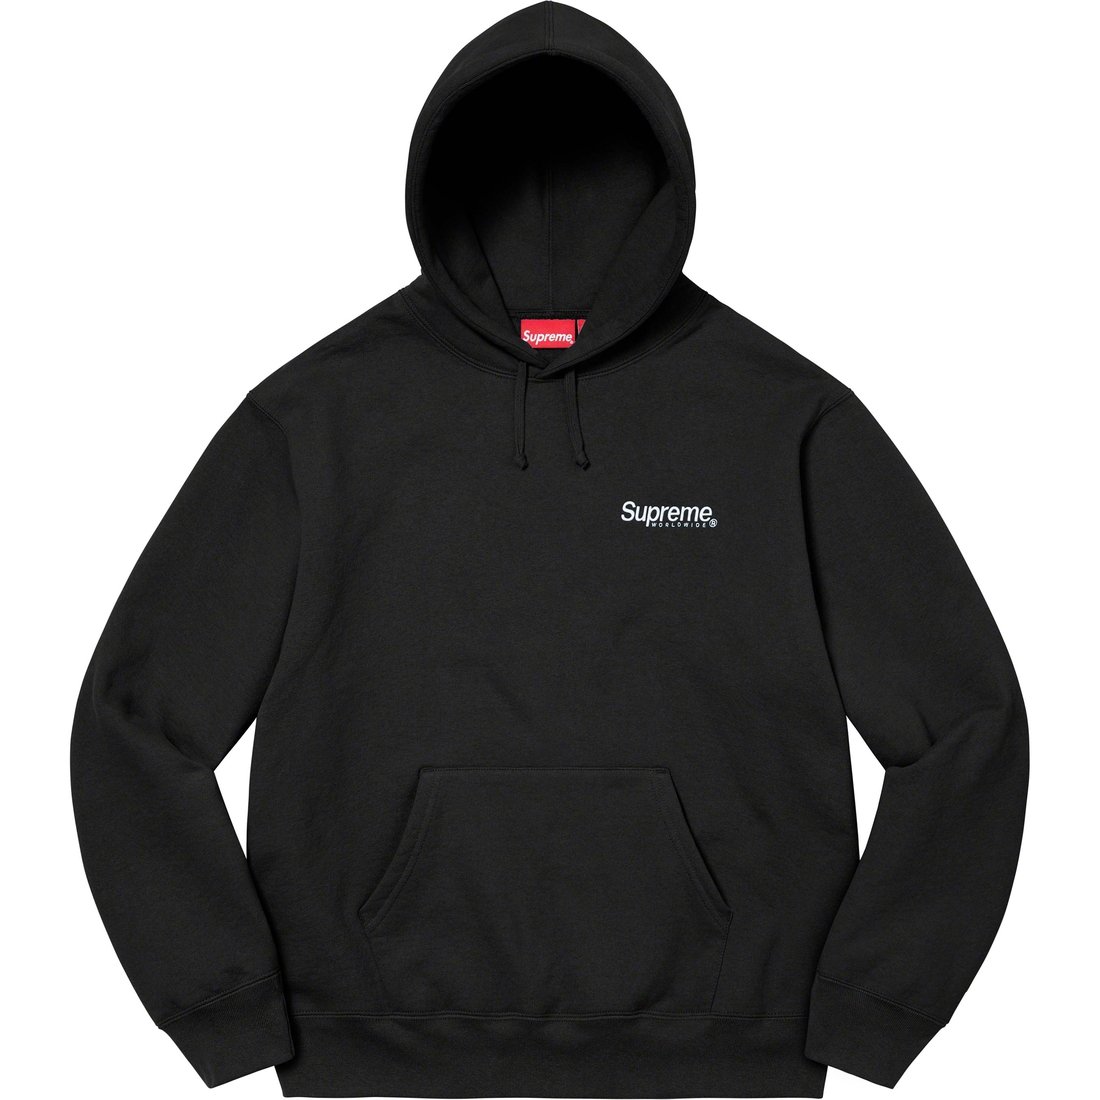 Details on Worldwide Hooded Sweatshirt Black from spring summer 2023 (Price is $158)